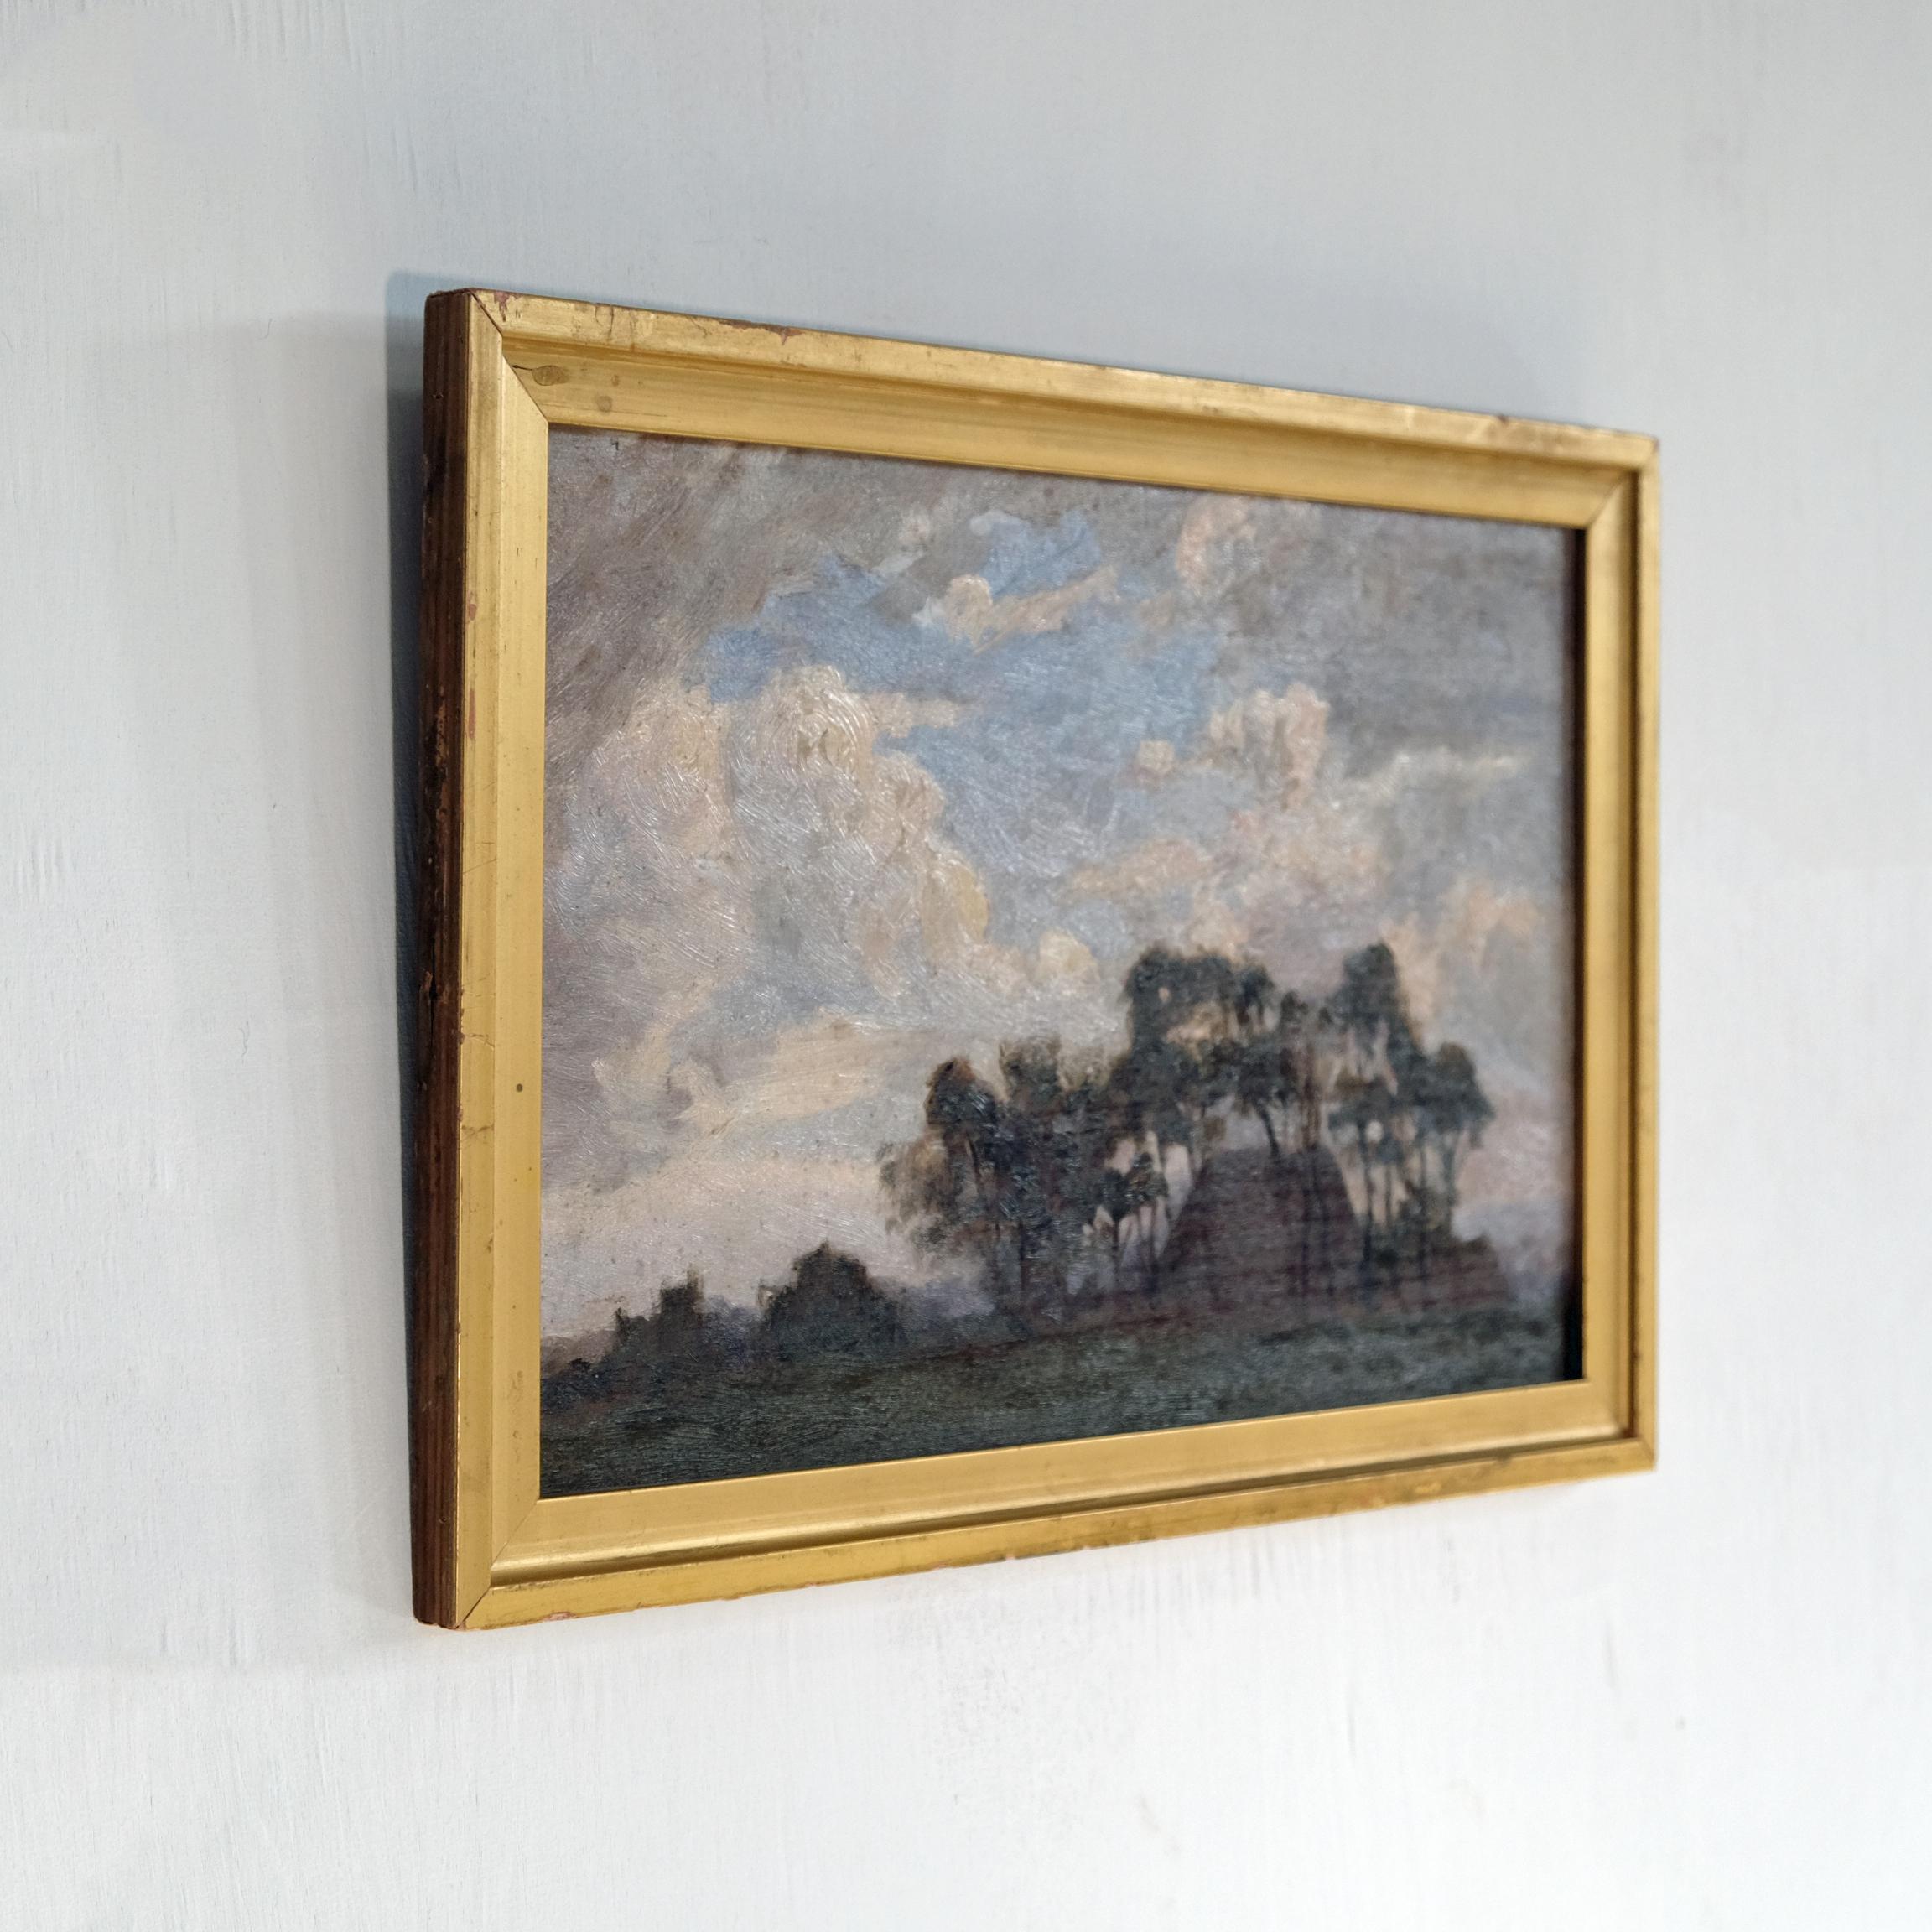 Edwardian V. M. Biddulph Oil Painting, British Post-Impressionist, Landscape Wall Art 1900 For Sale